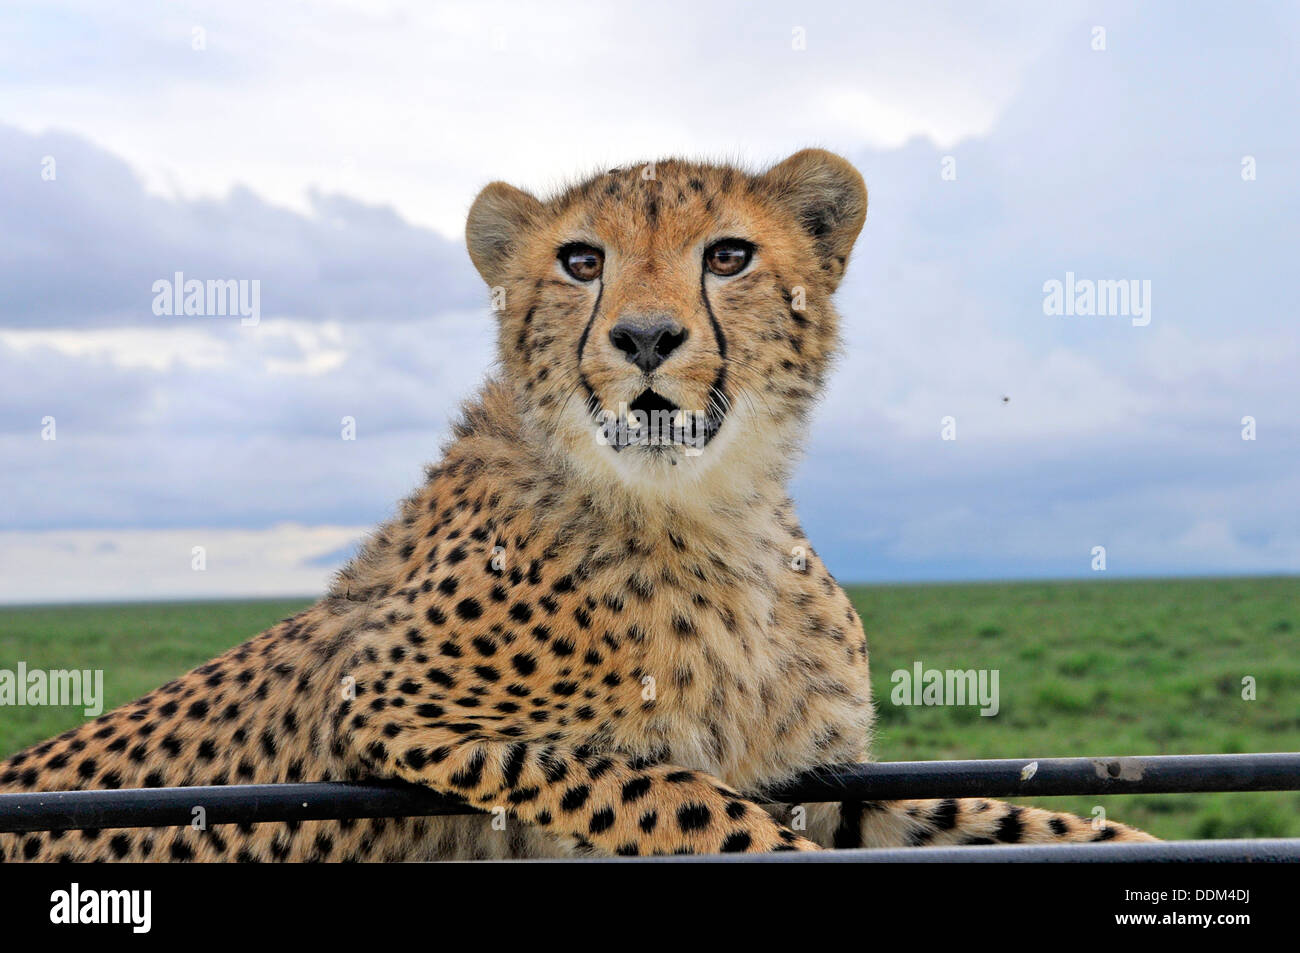 Closeup of wild cheetah on roof of safari vehicle. Tanzania Collection Stock Photo